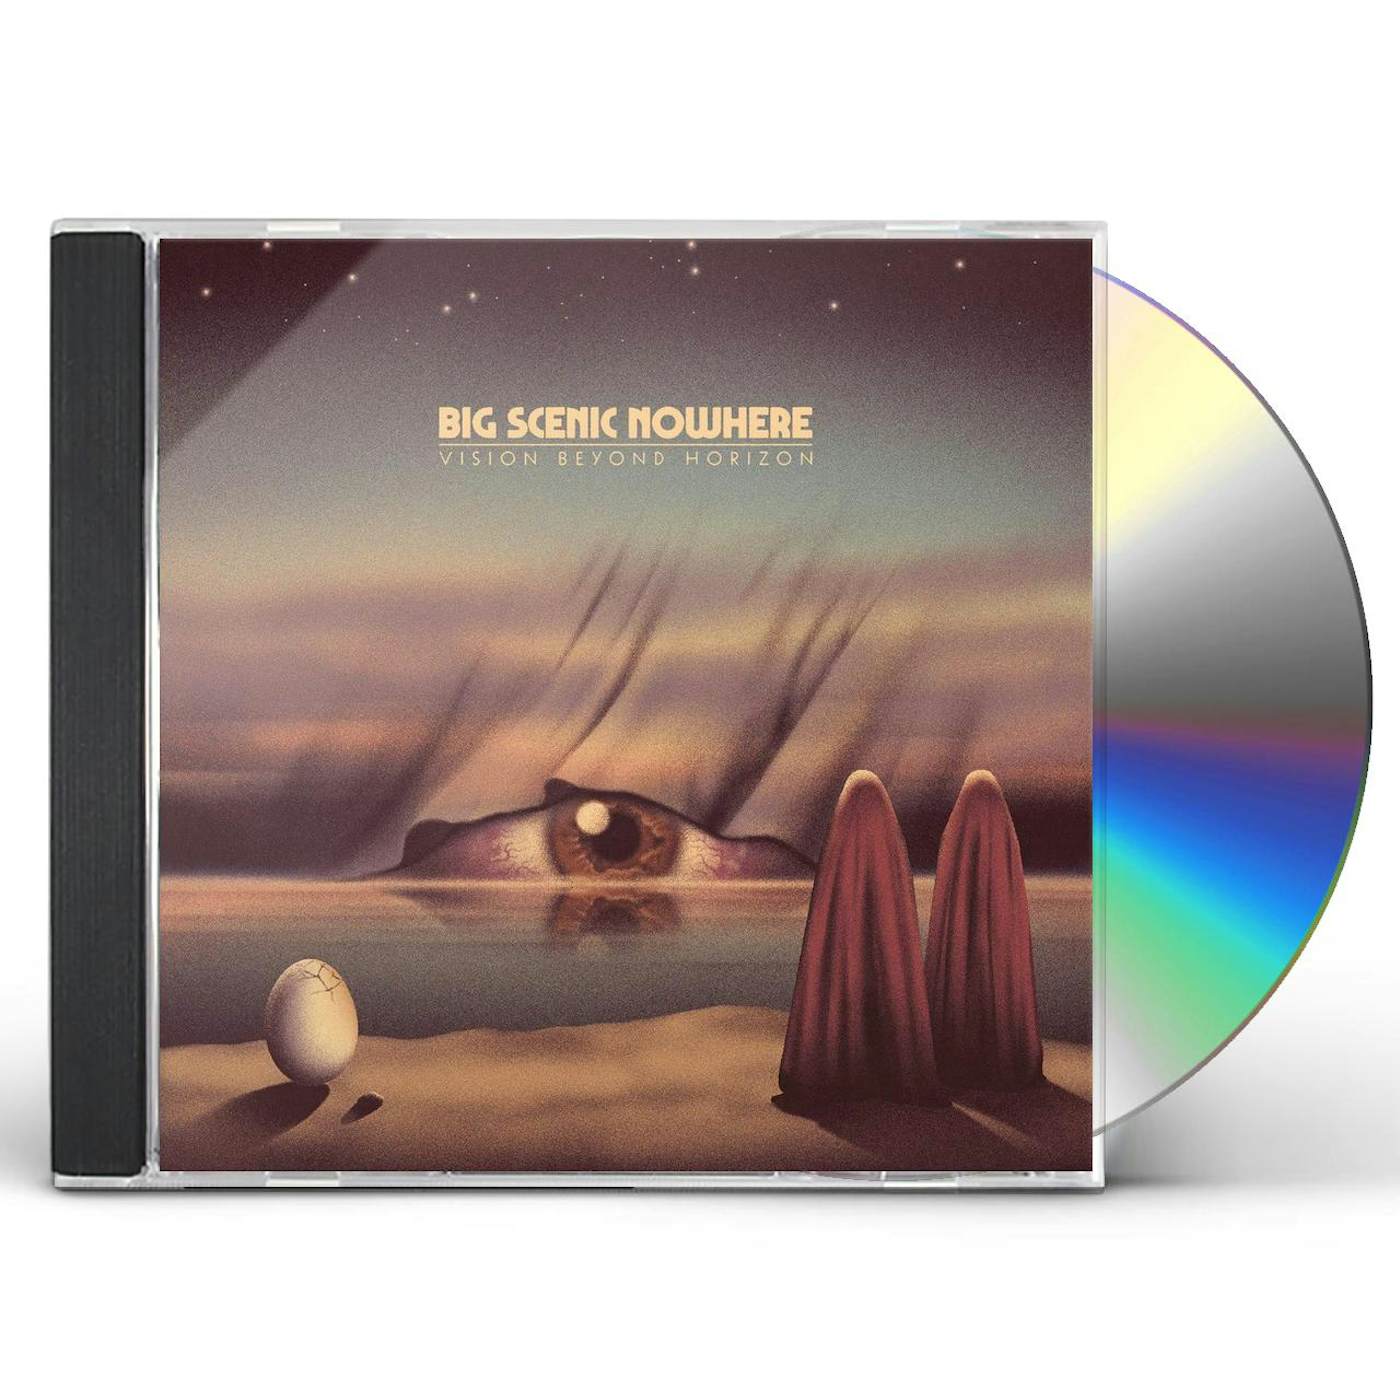 Big Scenic Nowhere VISION BEYOND HORIZON CD